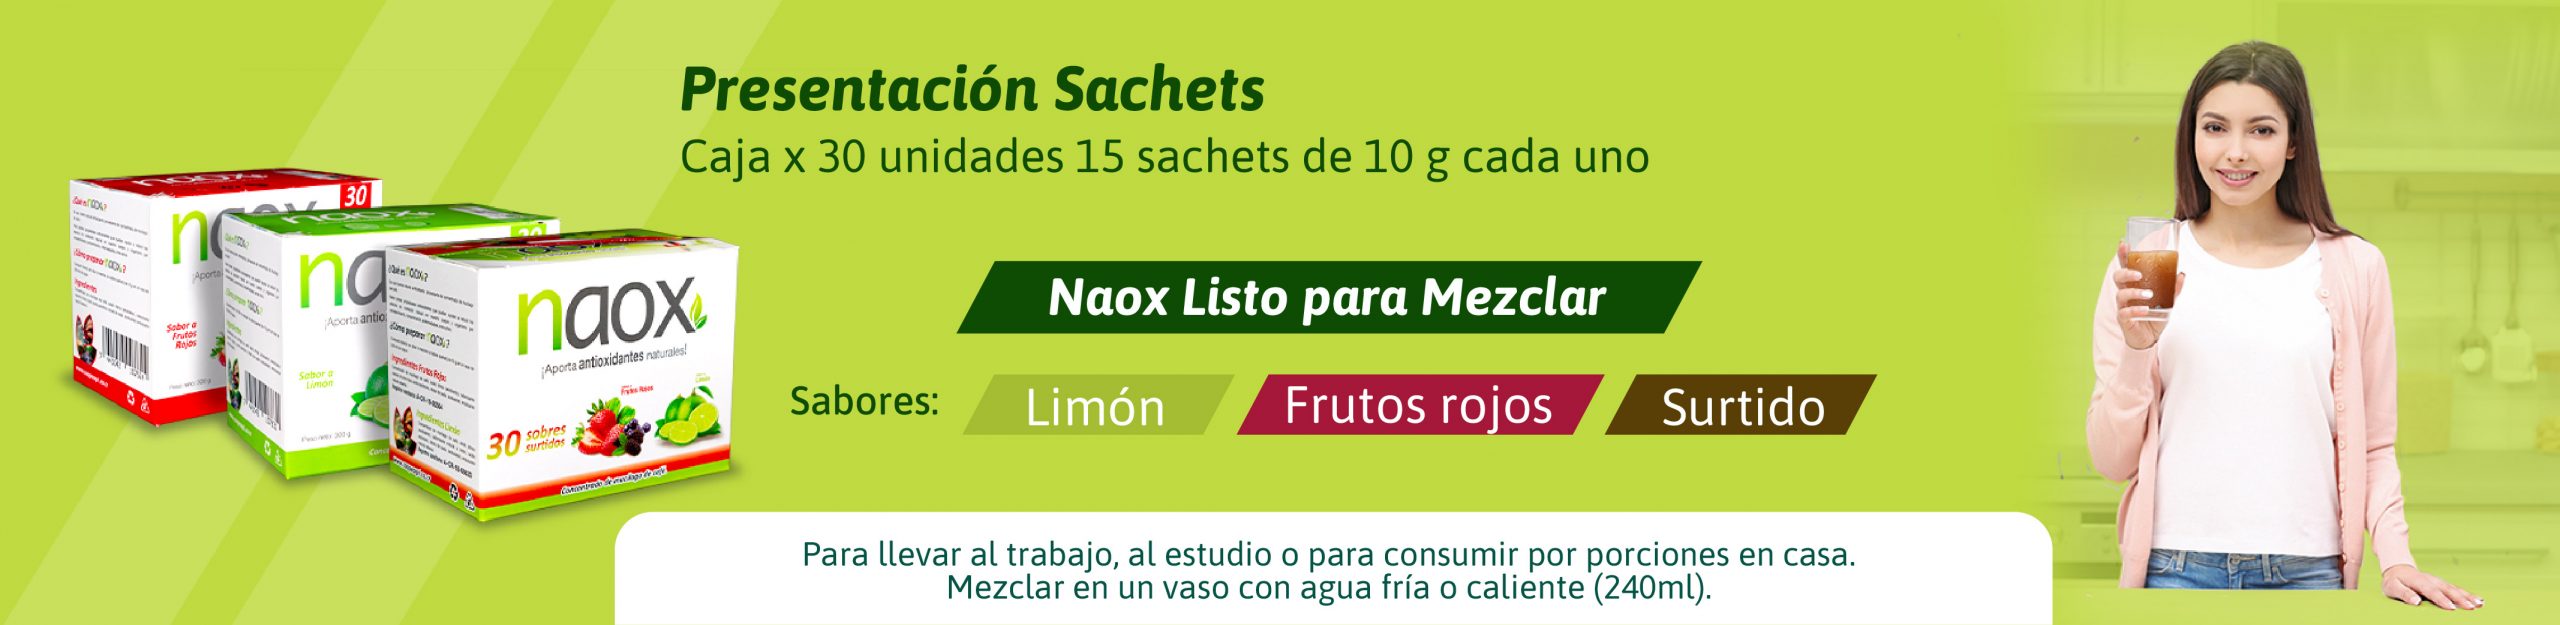 Naox Sachet, bebida antioxidante saludable